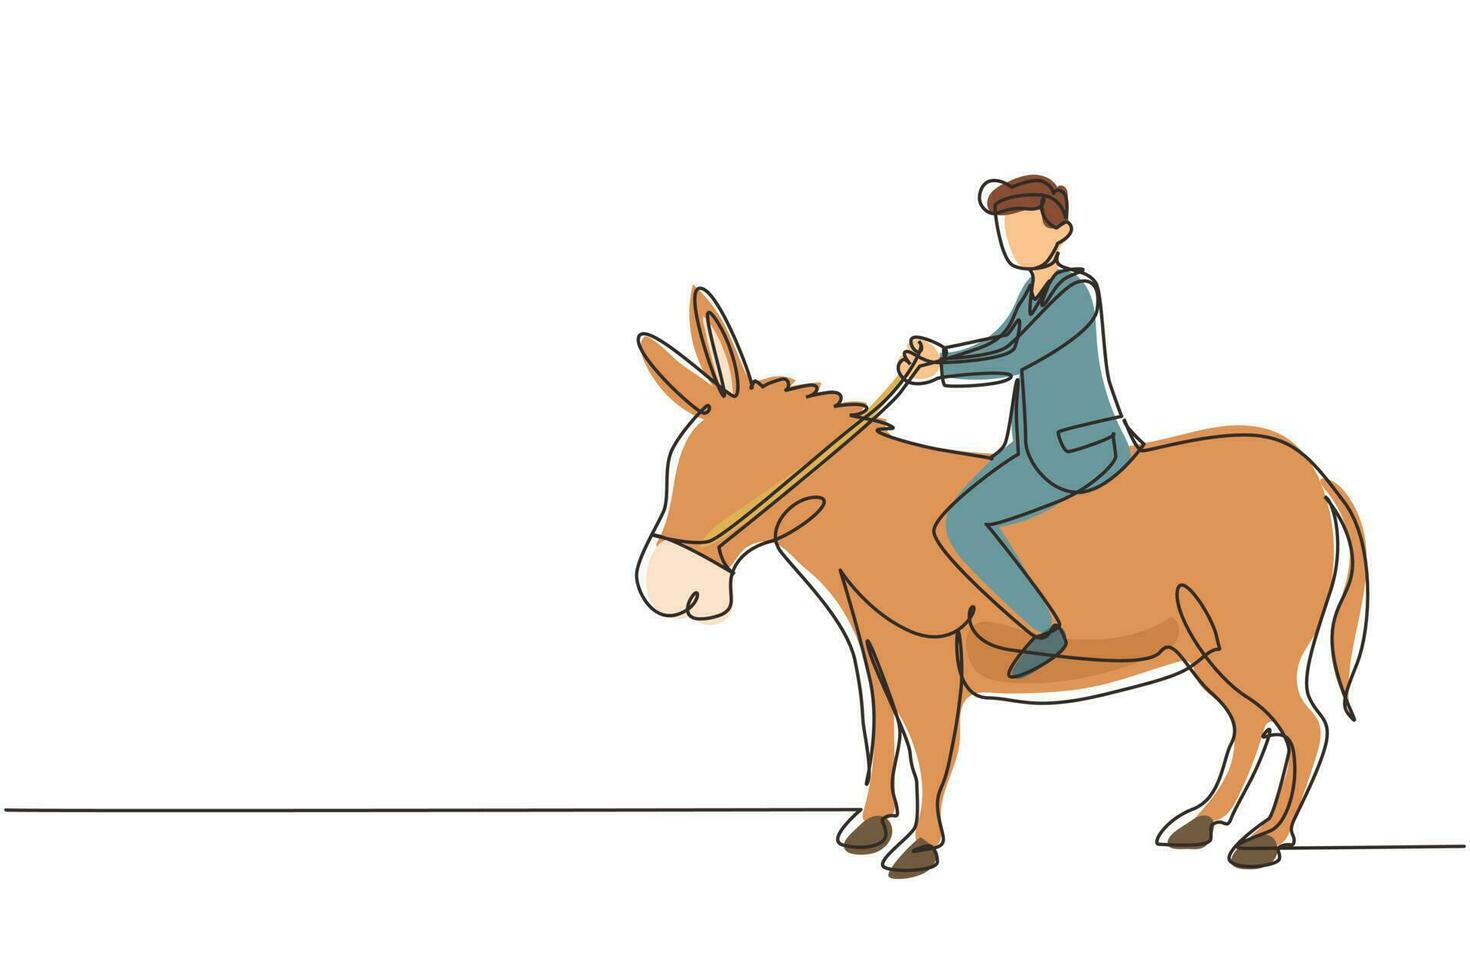 Single one line drawing businessman riding a donkey. Business man rides donkey. Driving donkey. Goal achievement concept. Business competition. Continuous line draw design graphic vector illustration